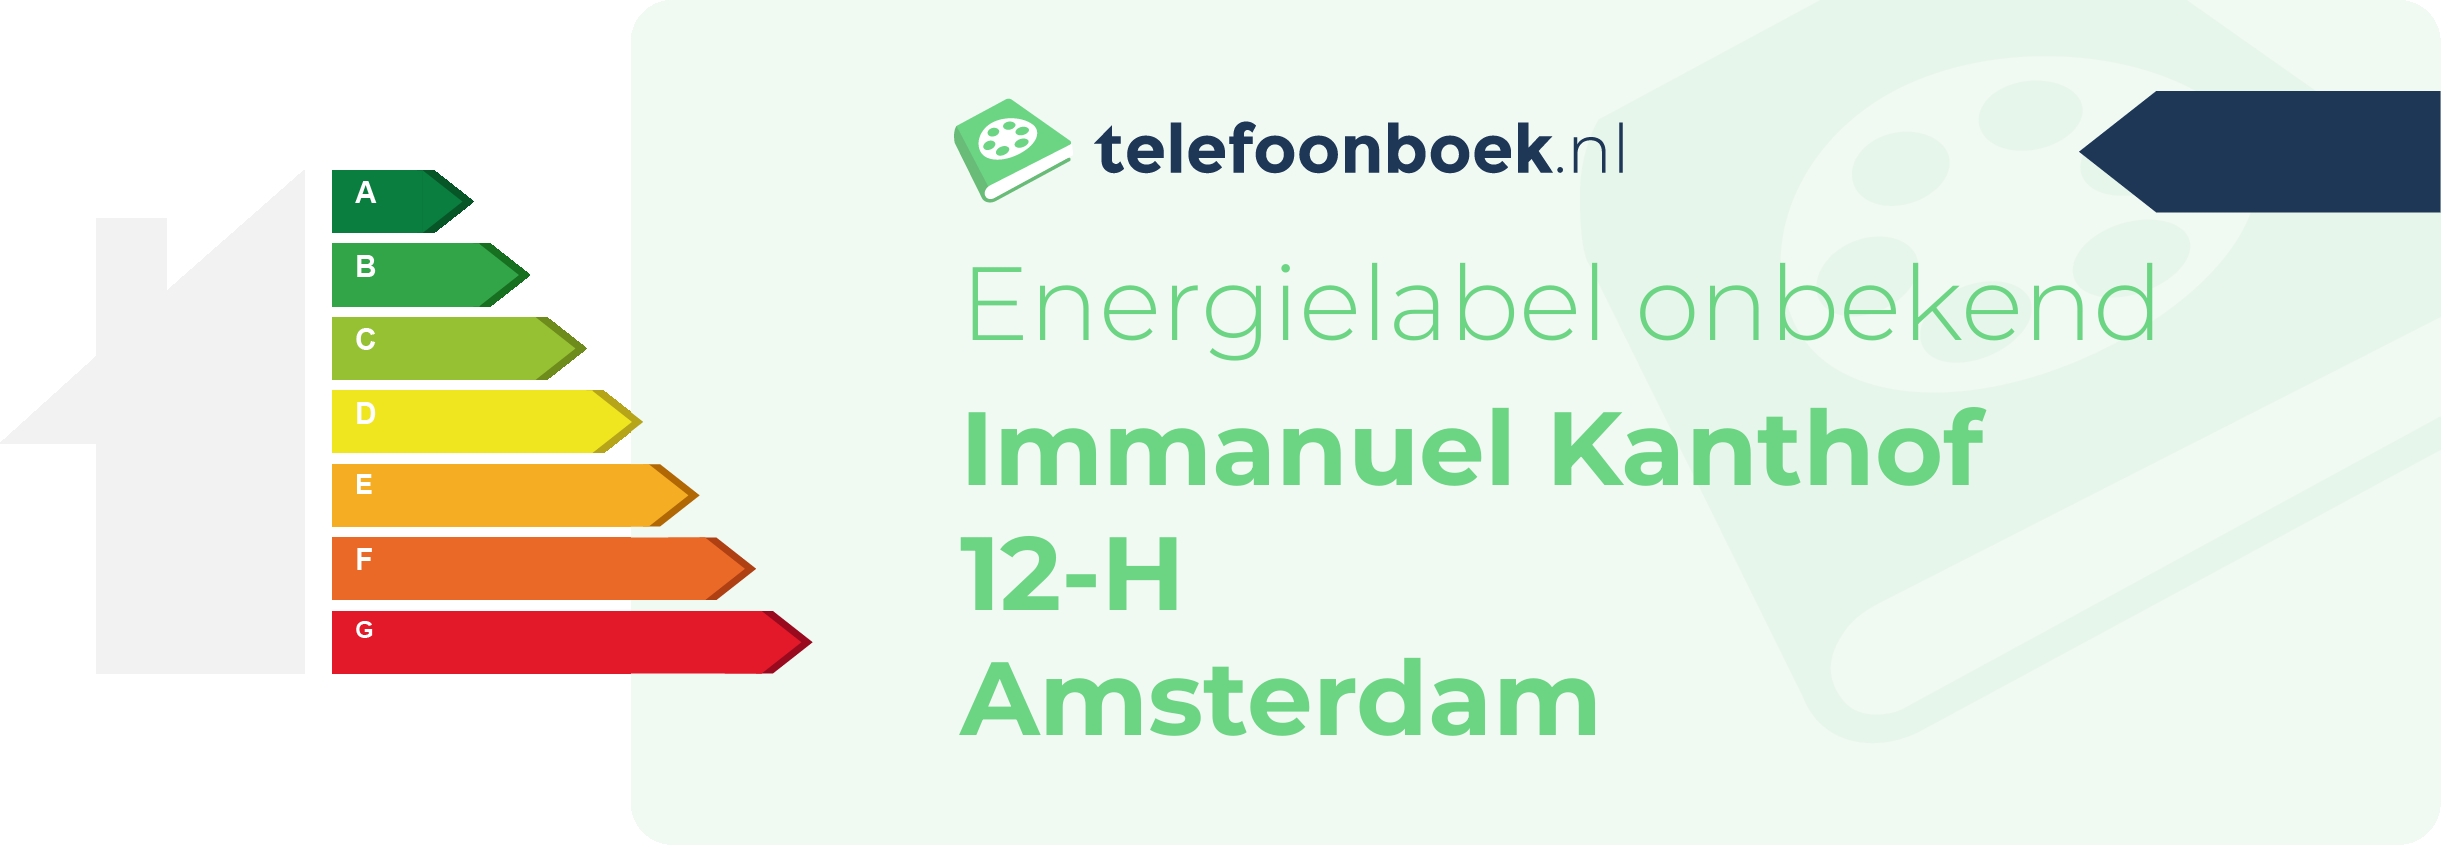 Energielabel Immanuel Kanthof 12-H Amsterdam